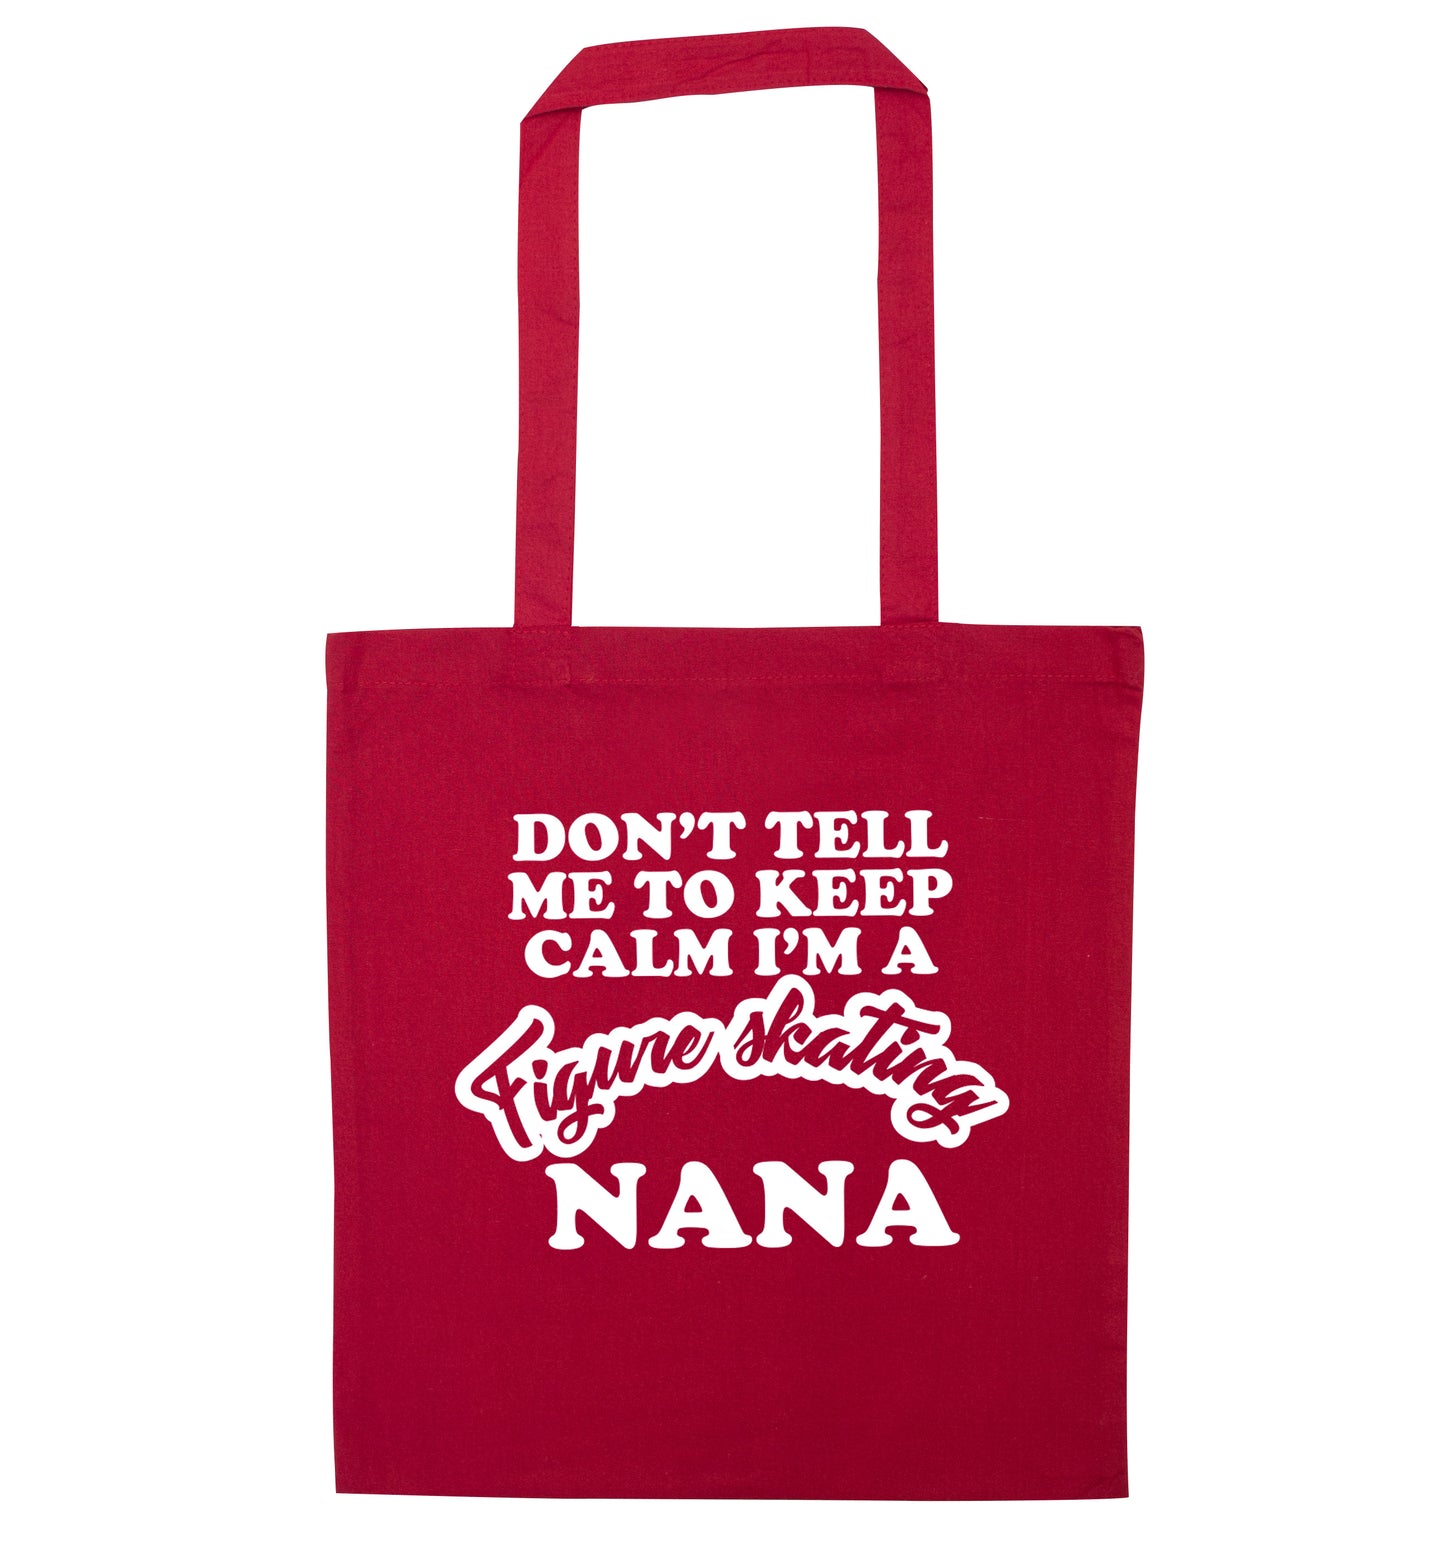 Don't tell me to keep calm I'm a figure skating nana red tote bag